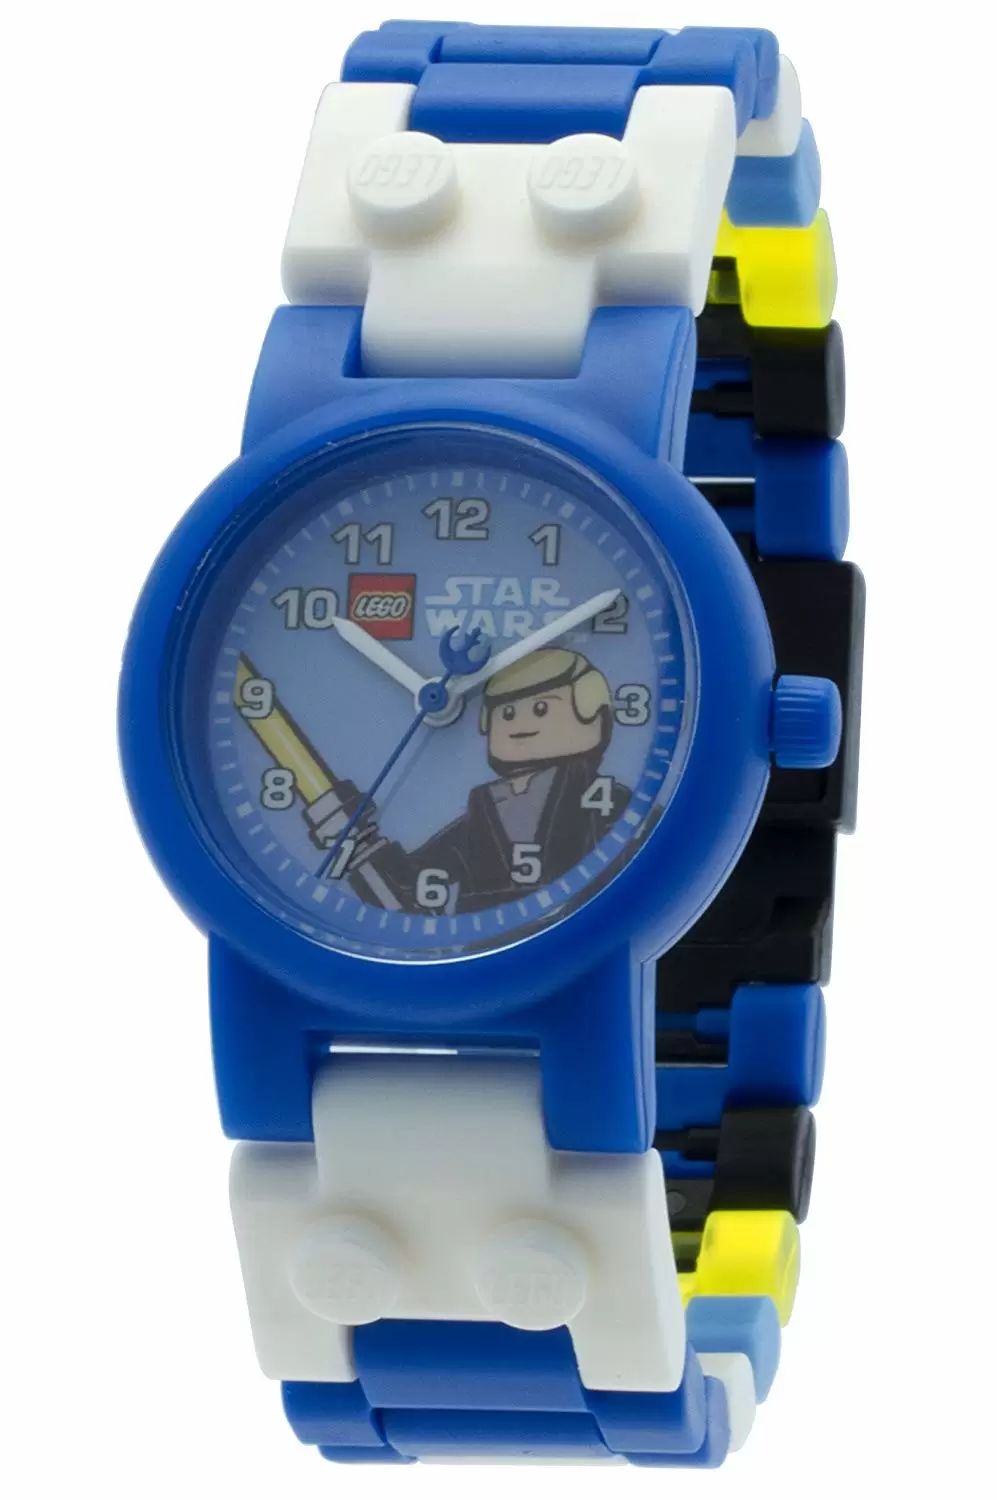 pistol udlejeren Revisor LEGO Star Wars Luke Skywalker Watch - LEGO Watches set 8020356